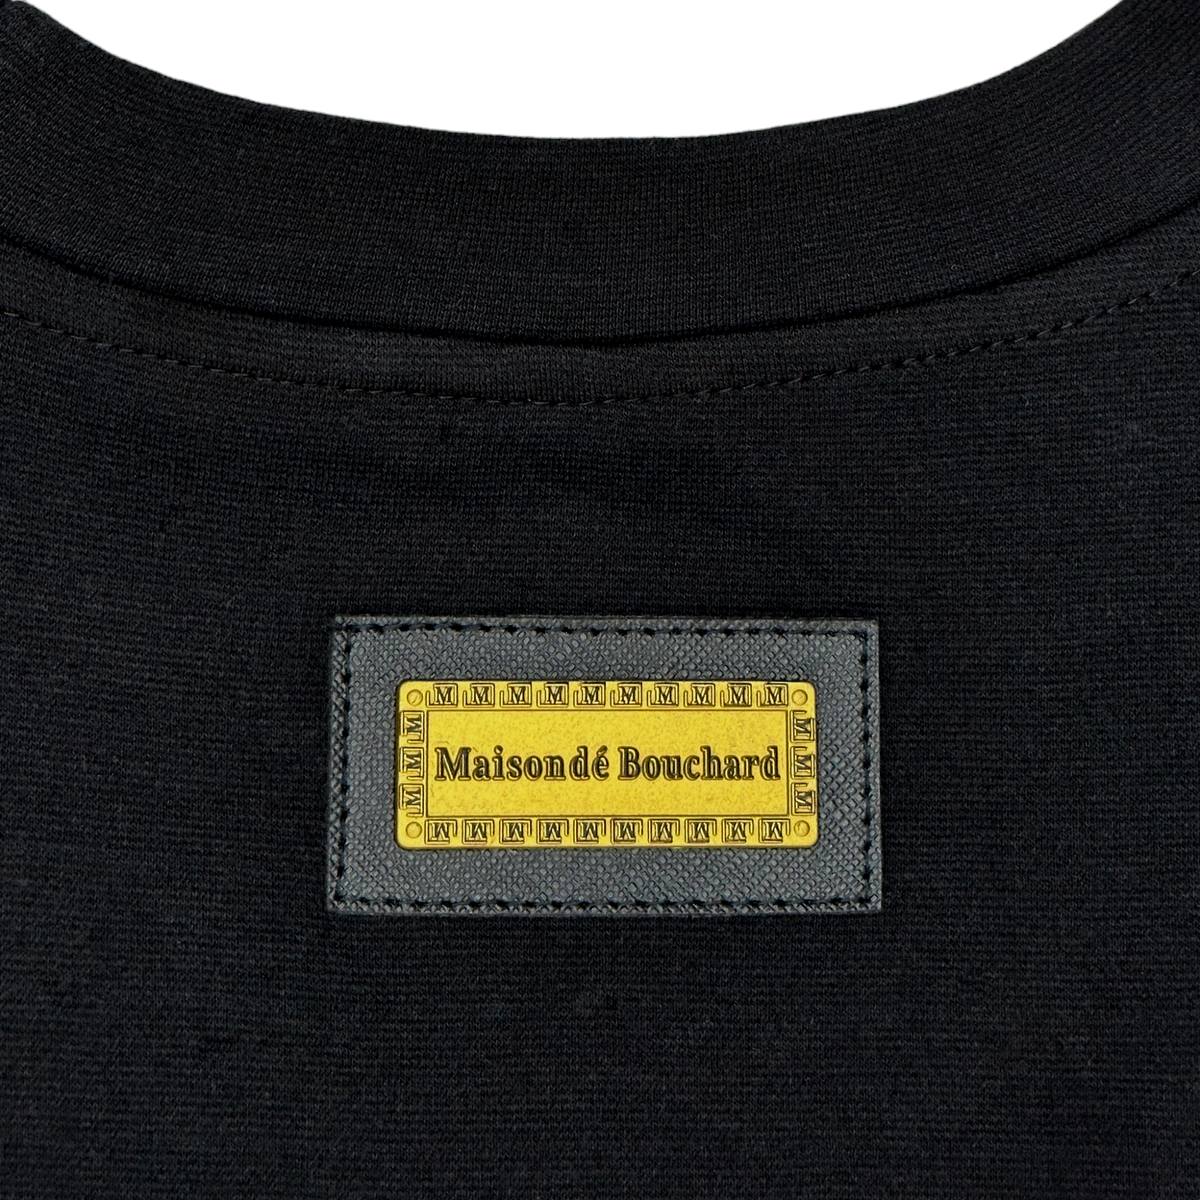 MDB Couture Kid's Metaluxe T-Shirt - Black